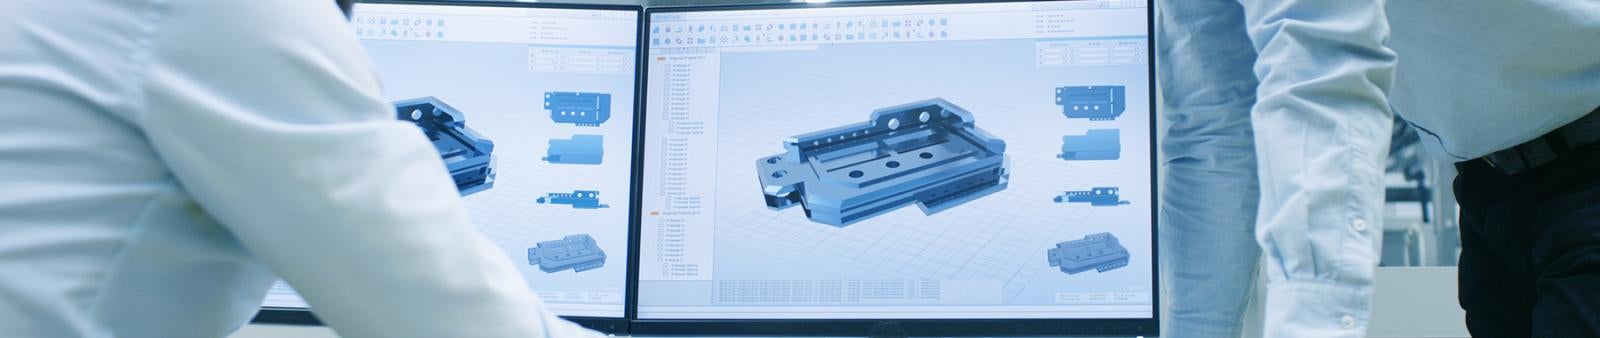 Drafting CAD Banner Image